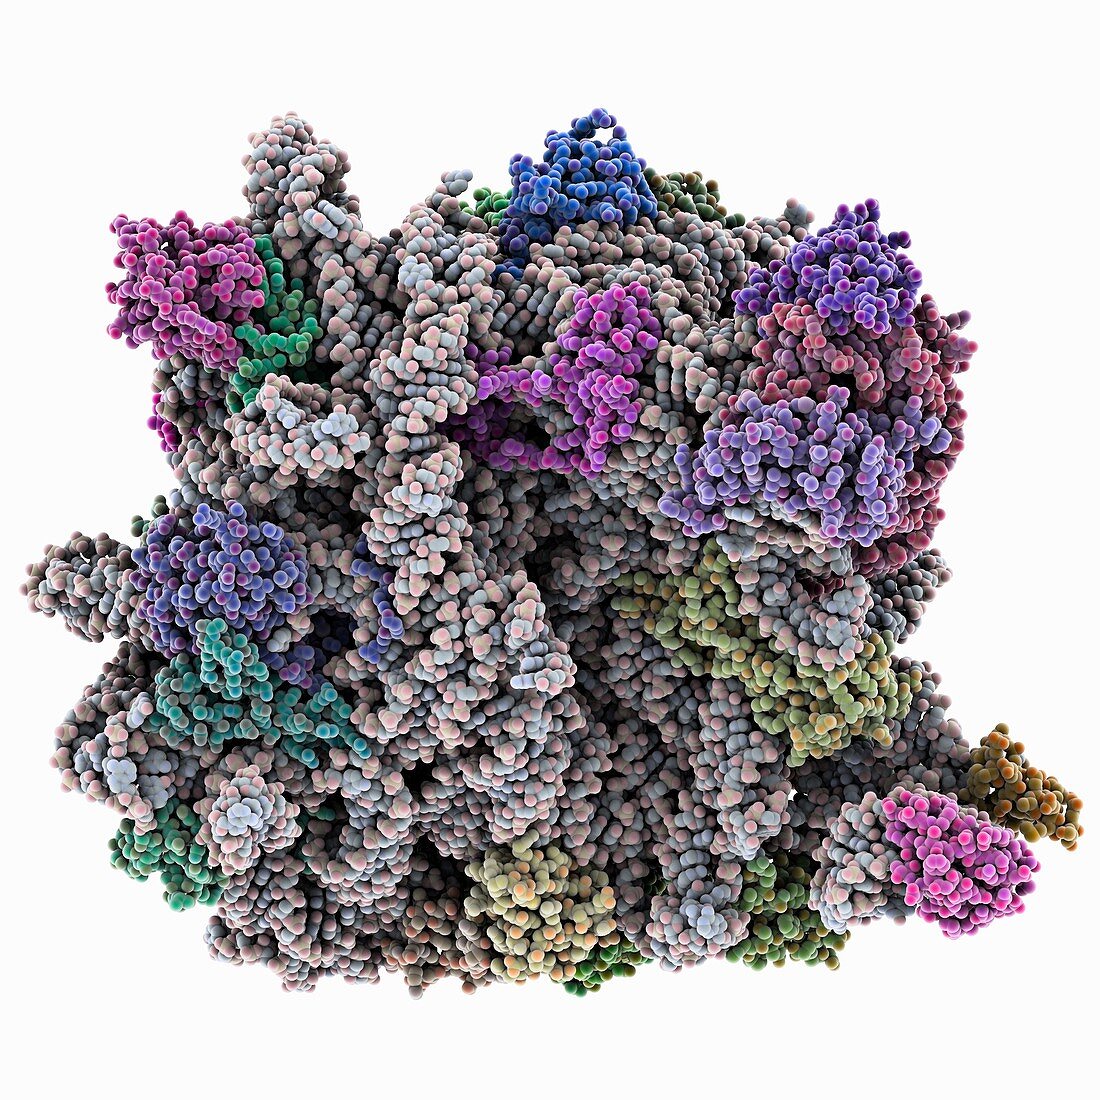 Archaeon ribosome,molecular model